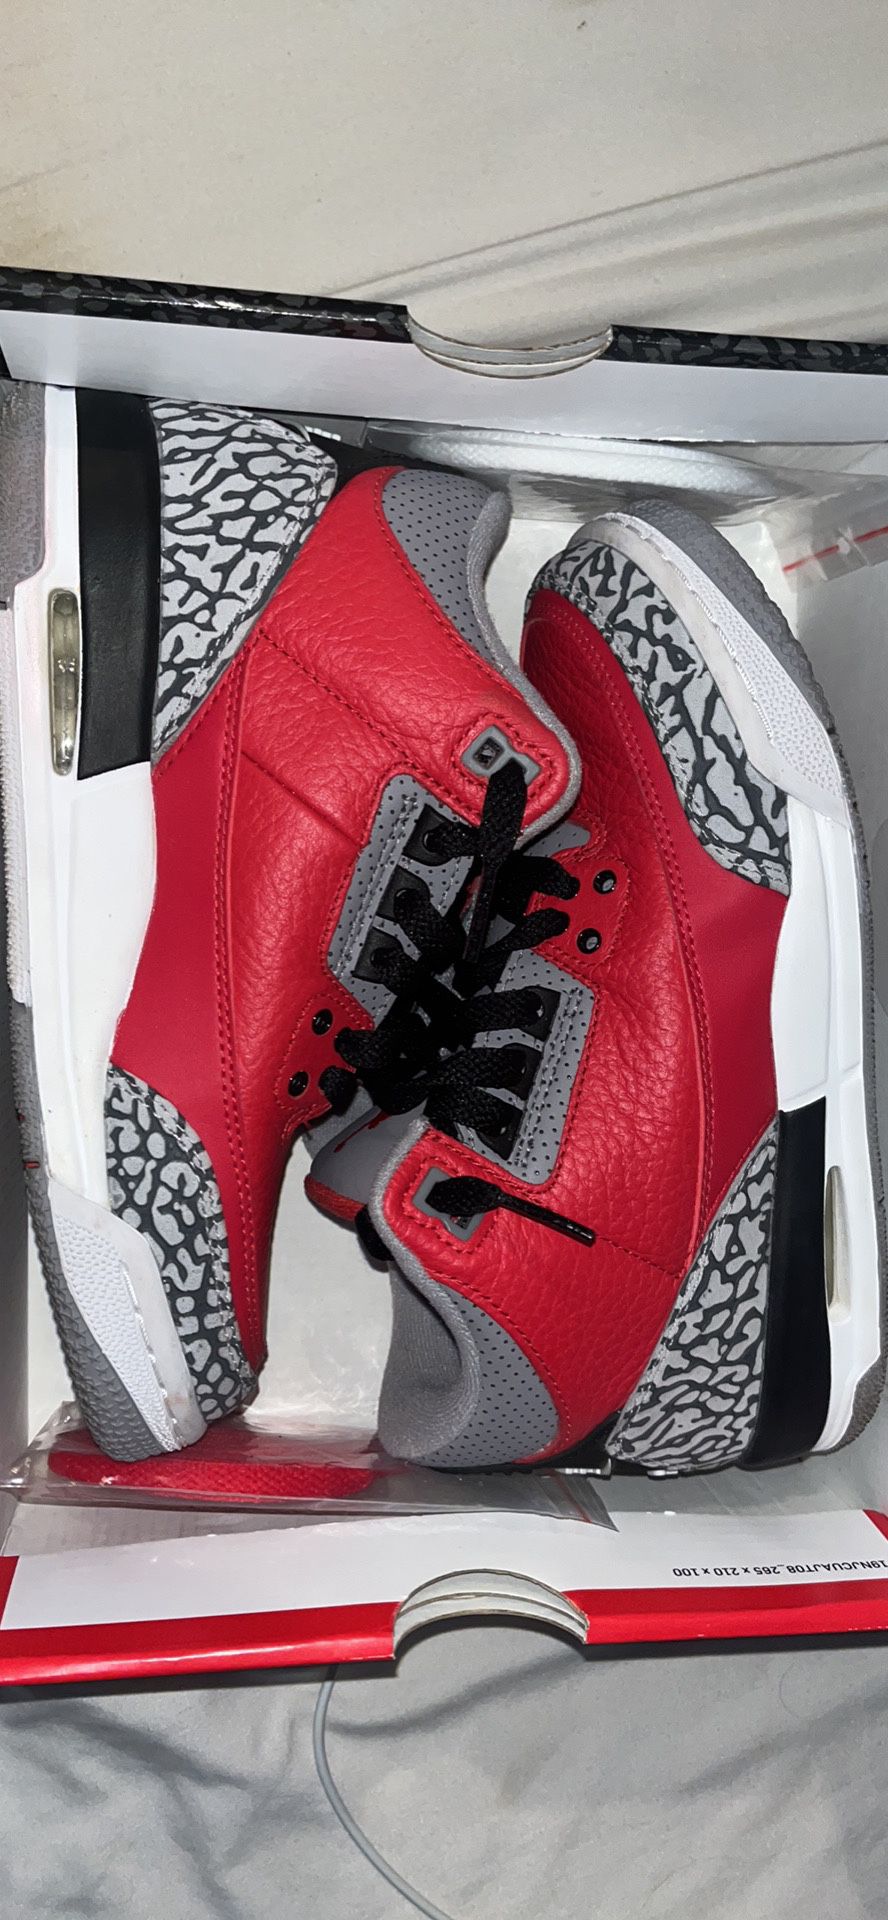 Air Jordan 3 “SE Fire Red” Size 3.5y